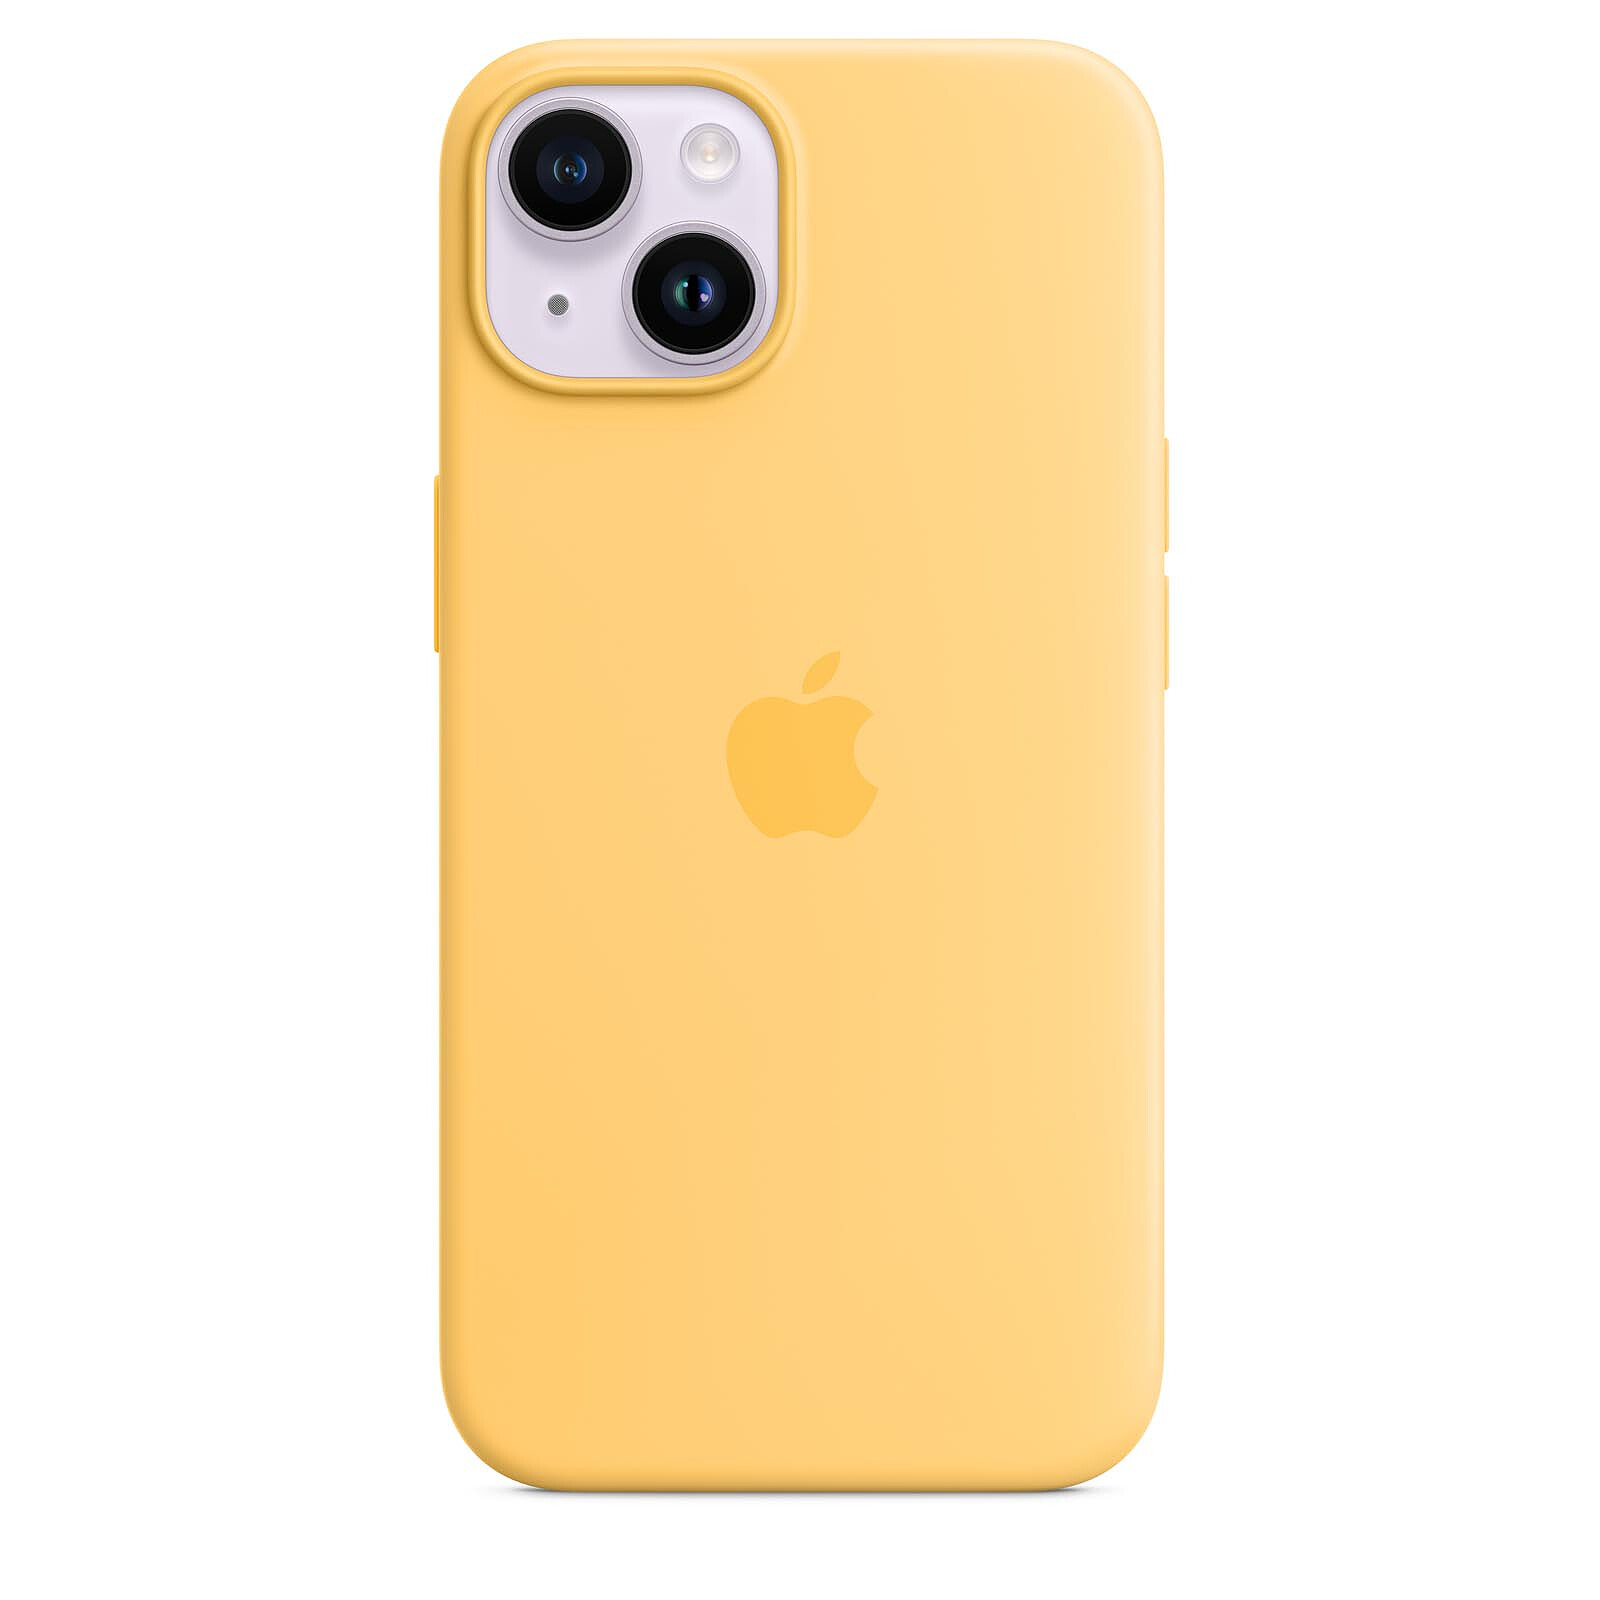 Apple iPhone 11 - Especificaciones técnicas - Orange